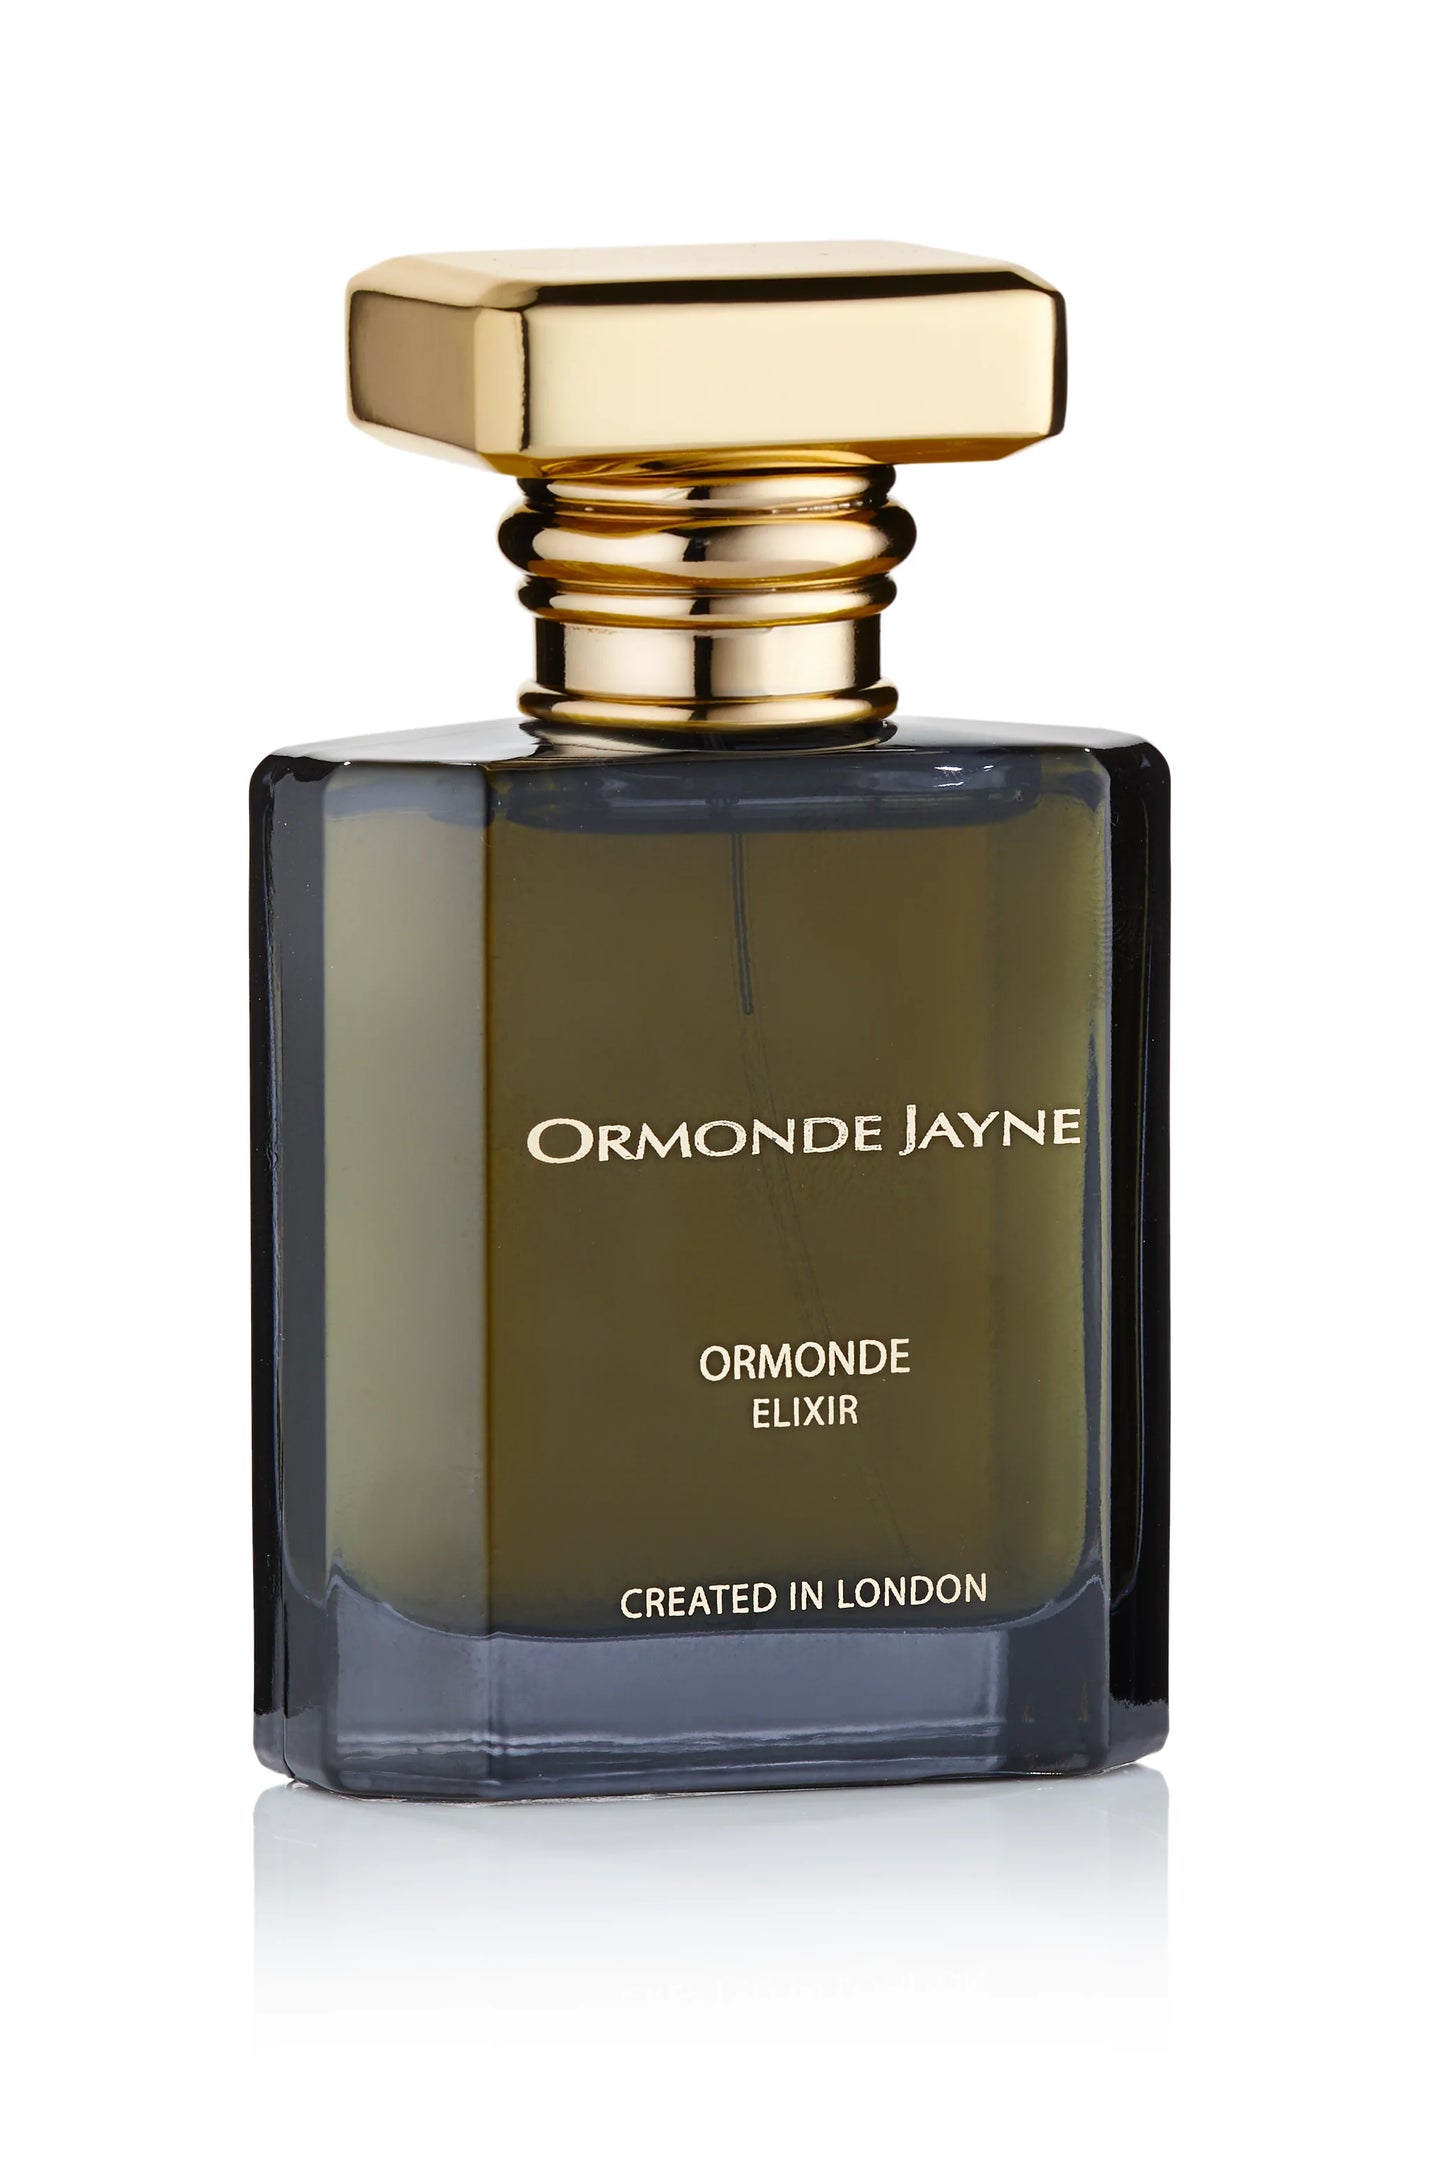 Ormonde Jayne Ormonde 长生不老药 2ml 0.06 fl。 oz 官方香味样品